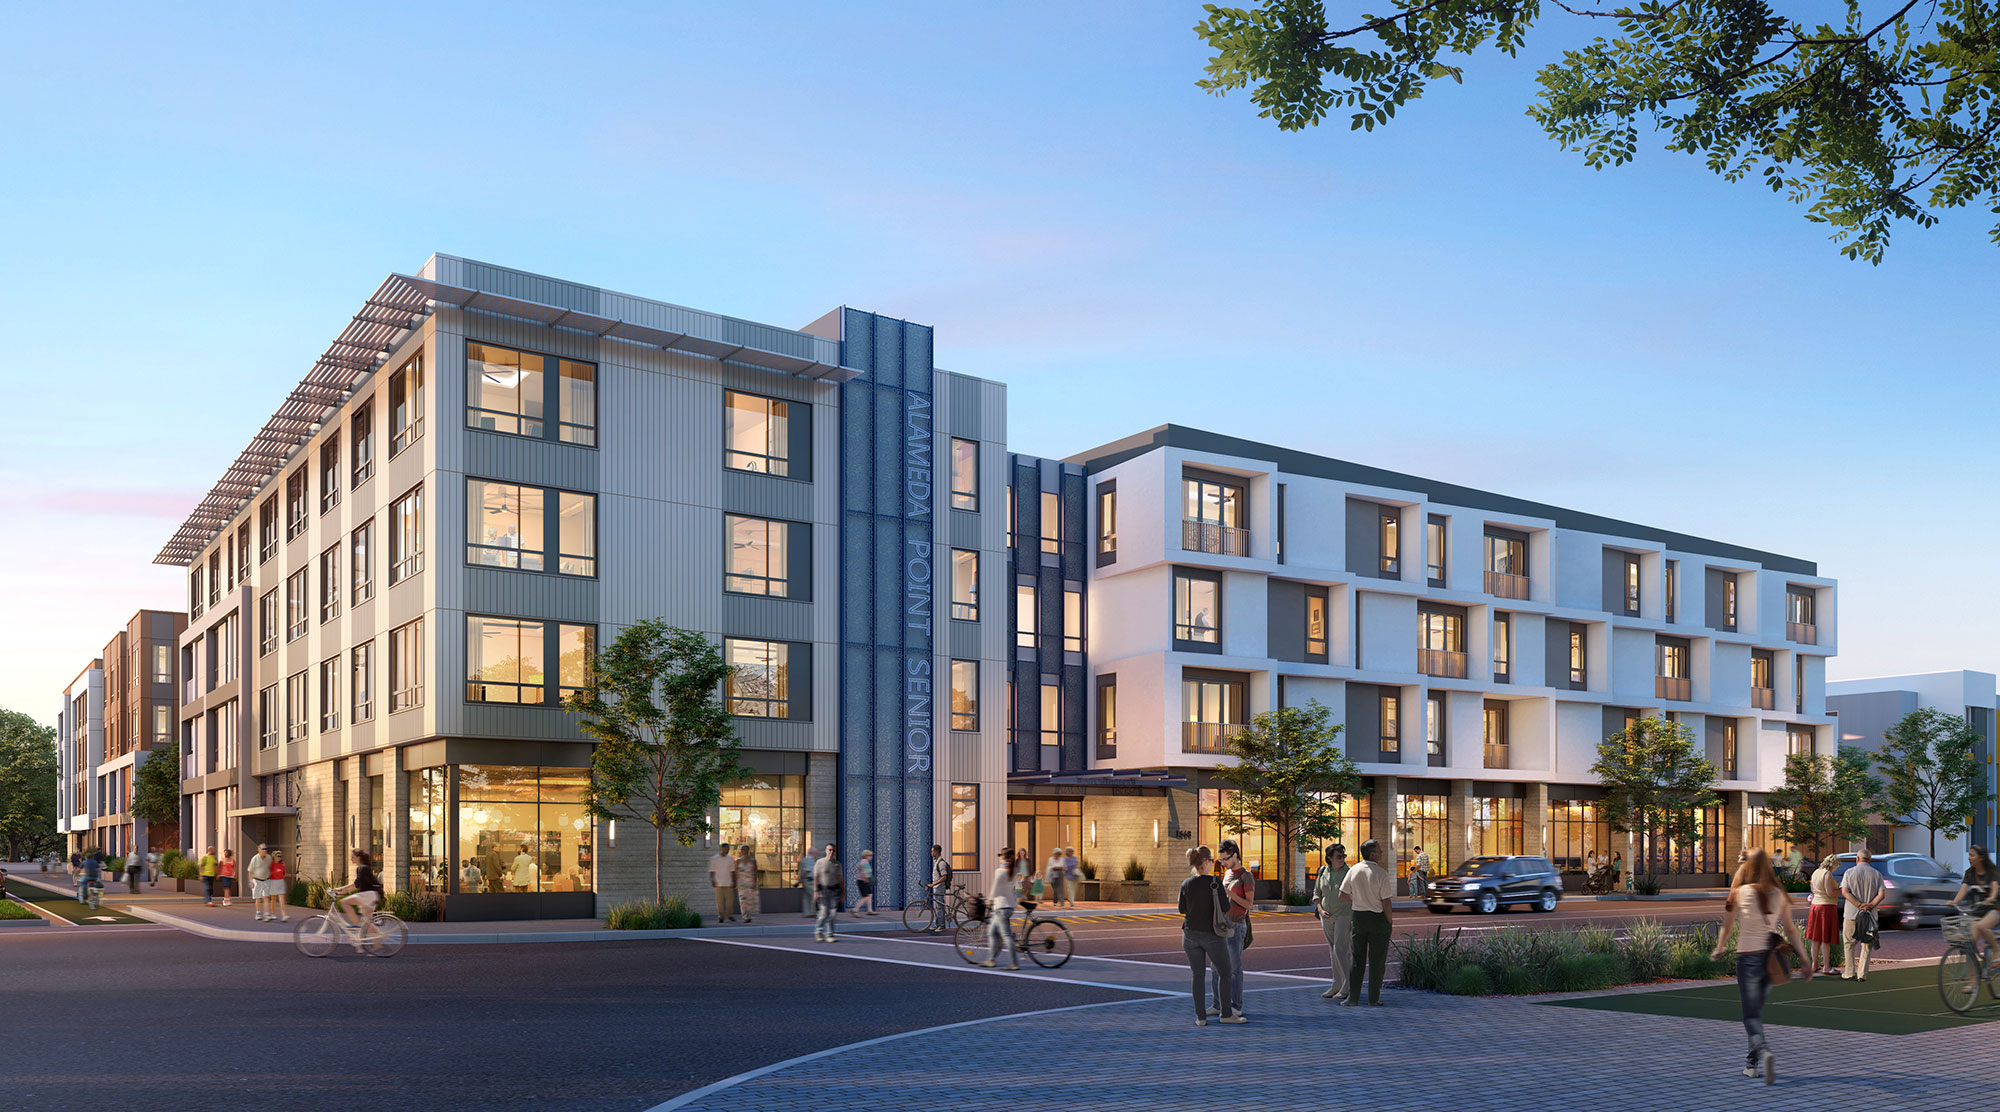 Alameda Point Senior Apartments Bay Area Senior Housing Community Breaks Ground Ktgy Architecture Planning